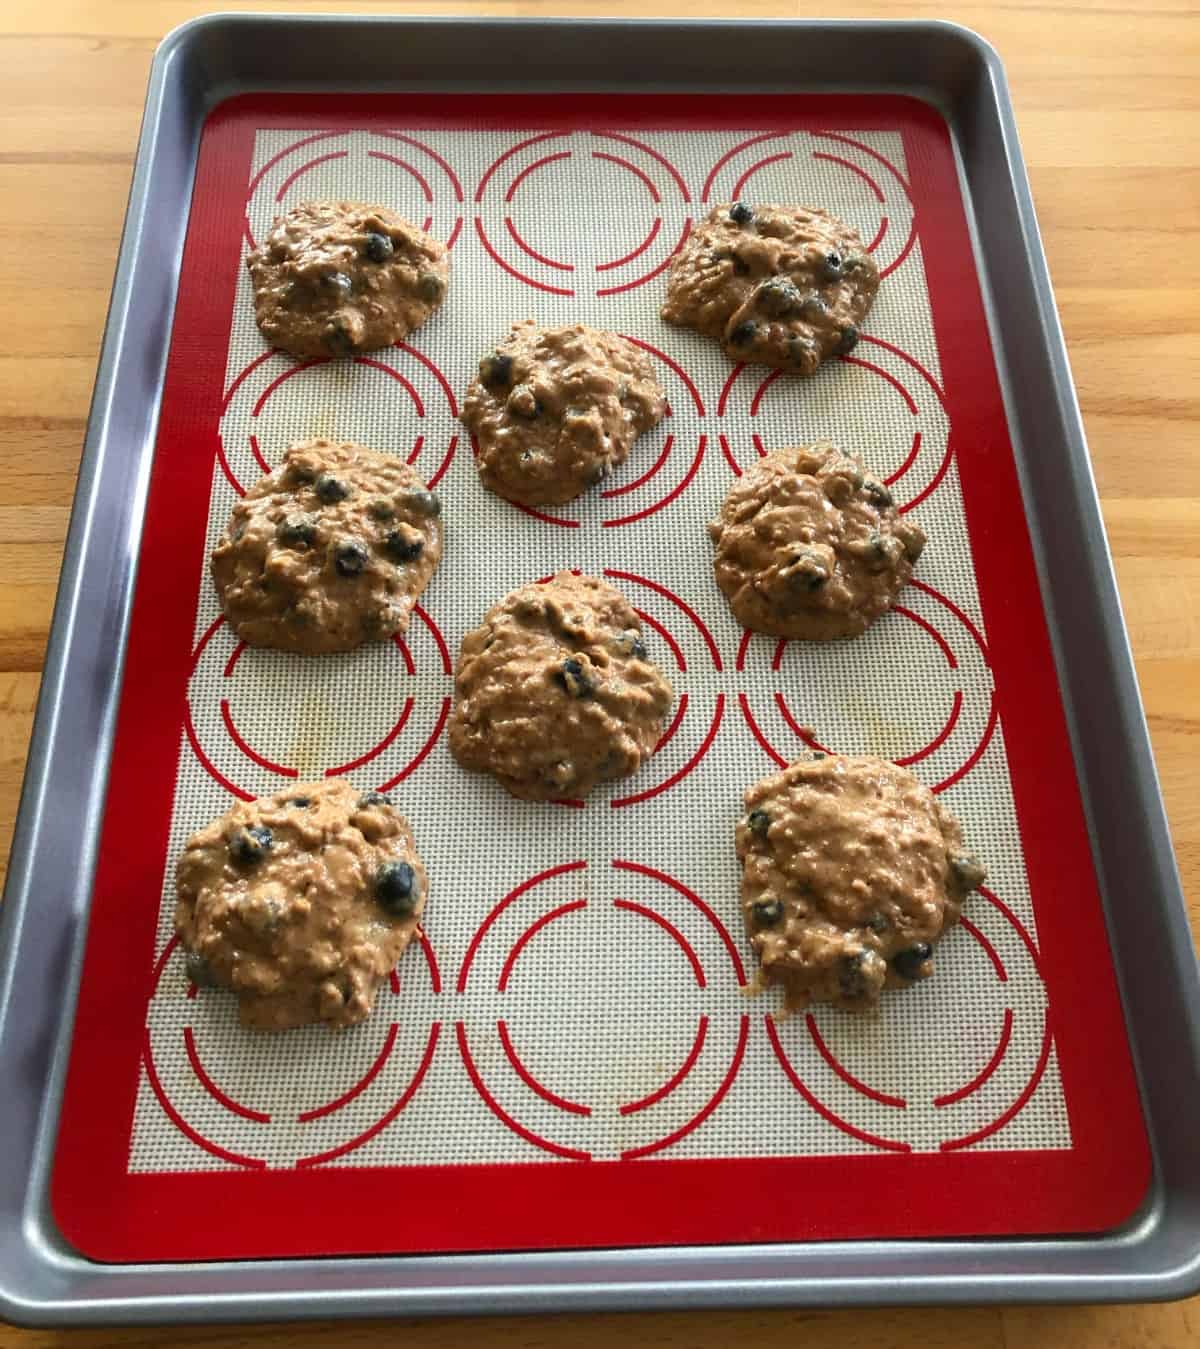 Mounds of blueberry bran muffin top batter on baking sheet.